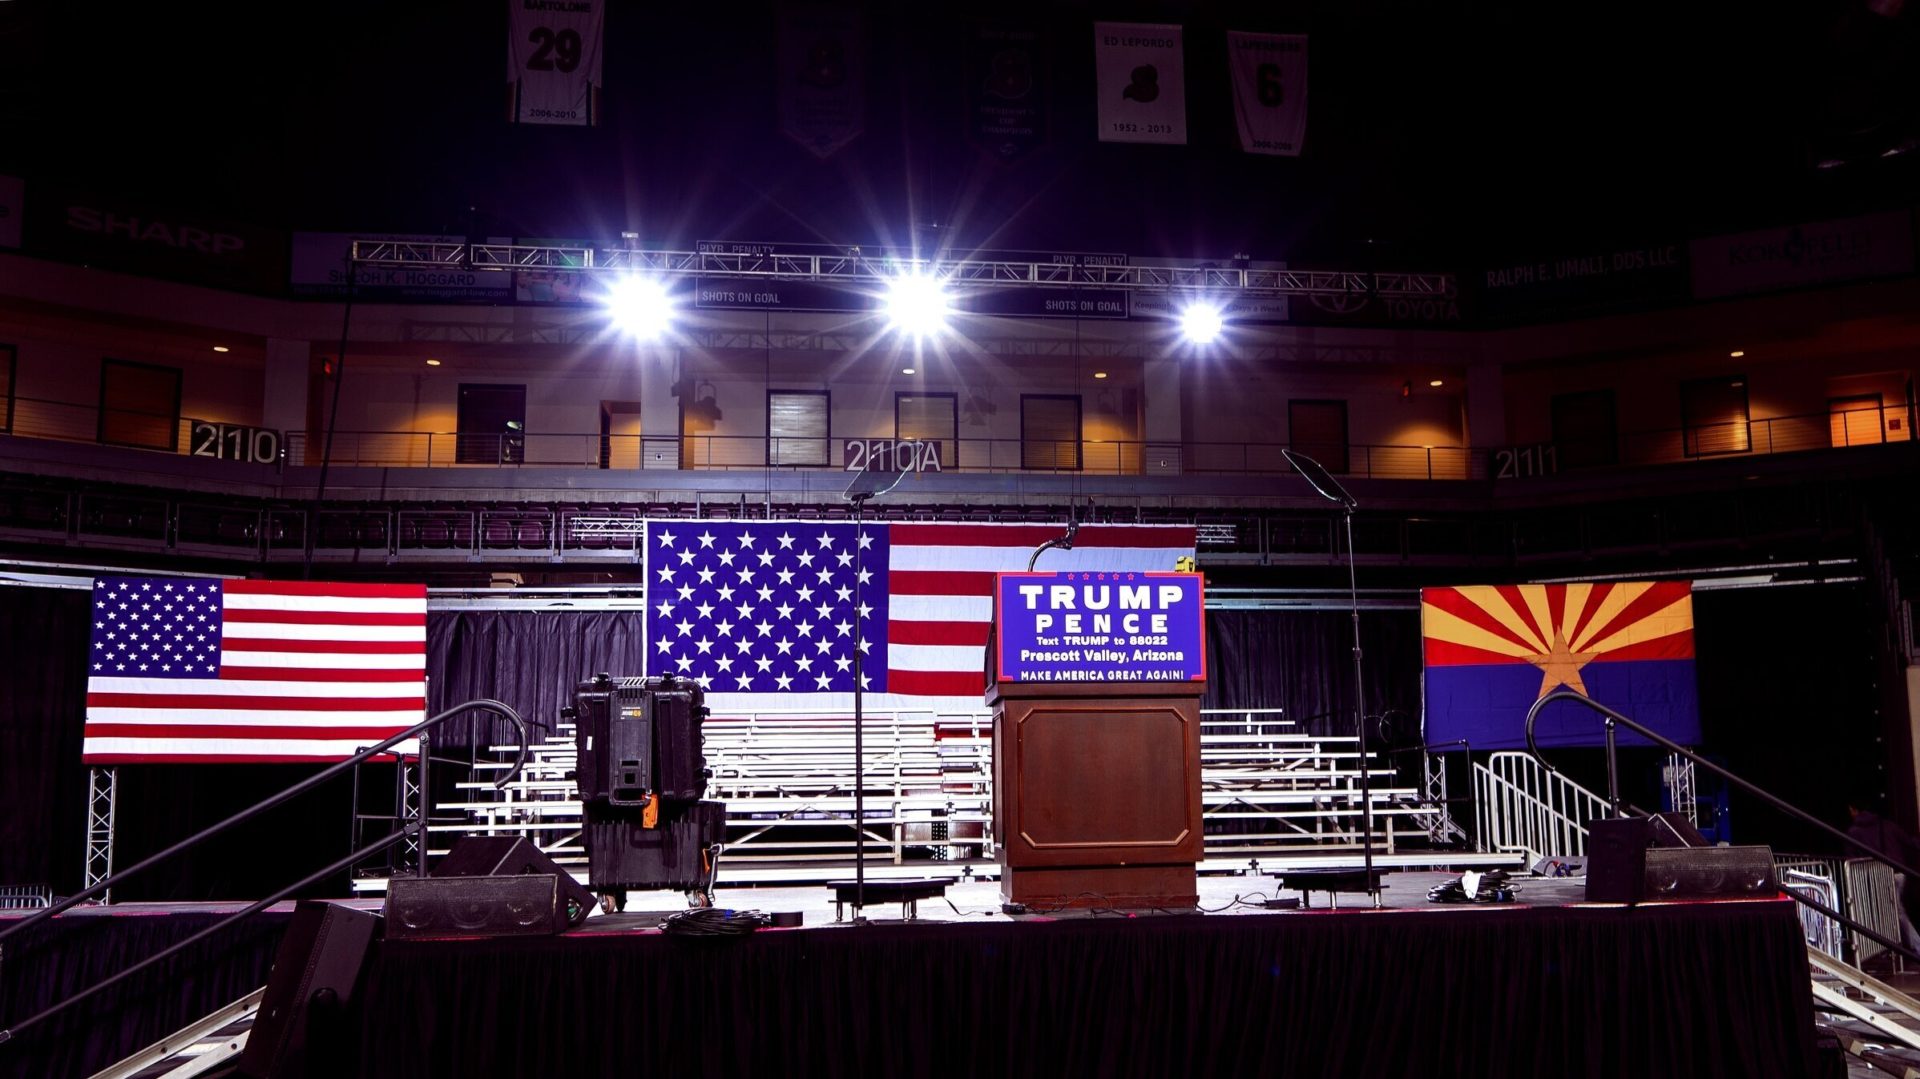 Trump-Pence Rally in Arizona, held on October 4, 2016. (Photo by Donald Teel | Unsplash)